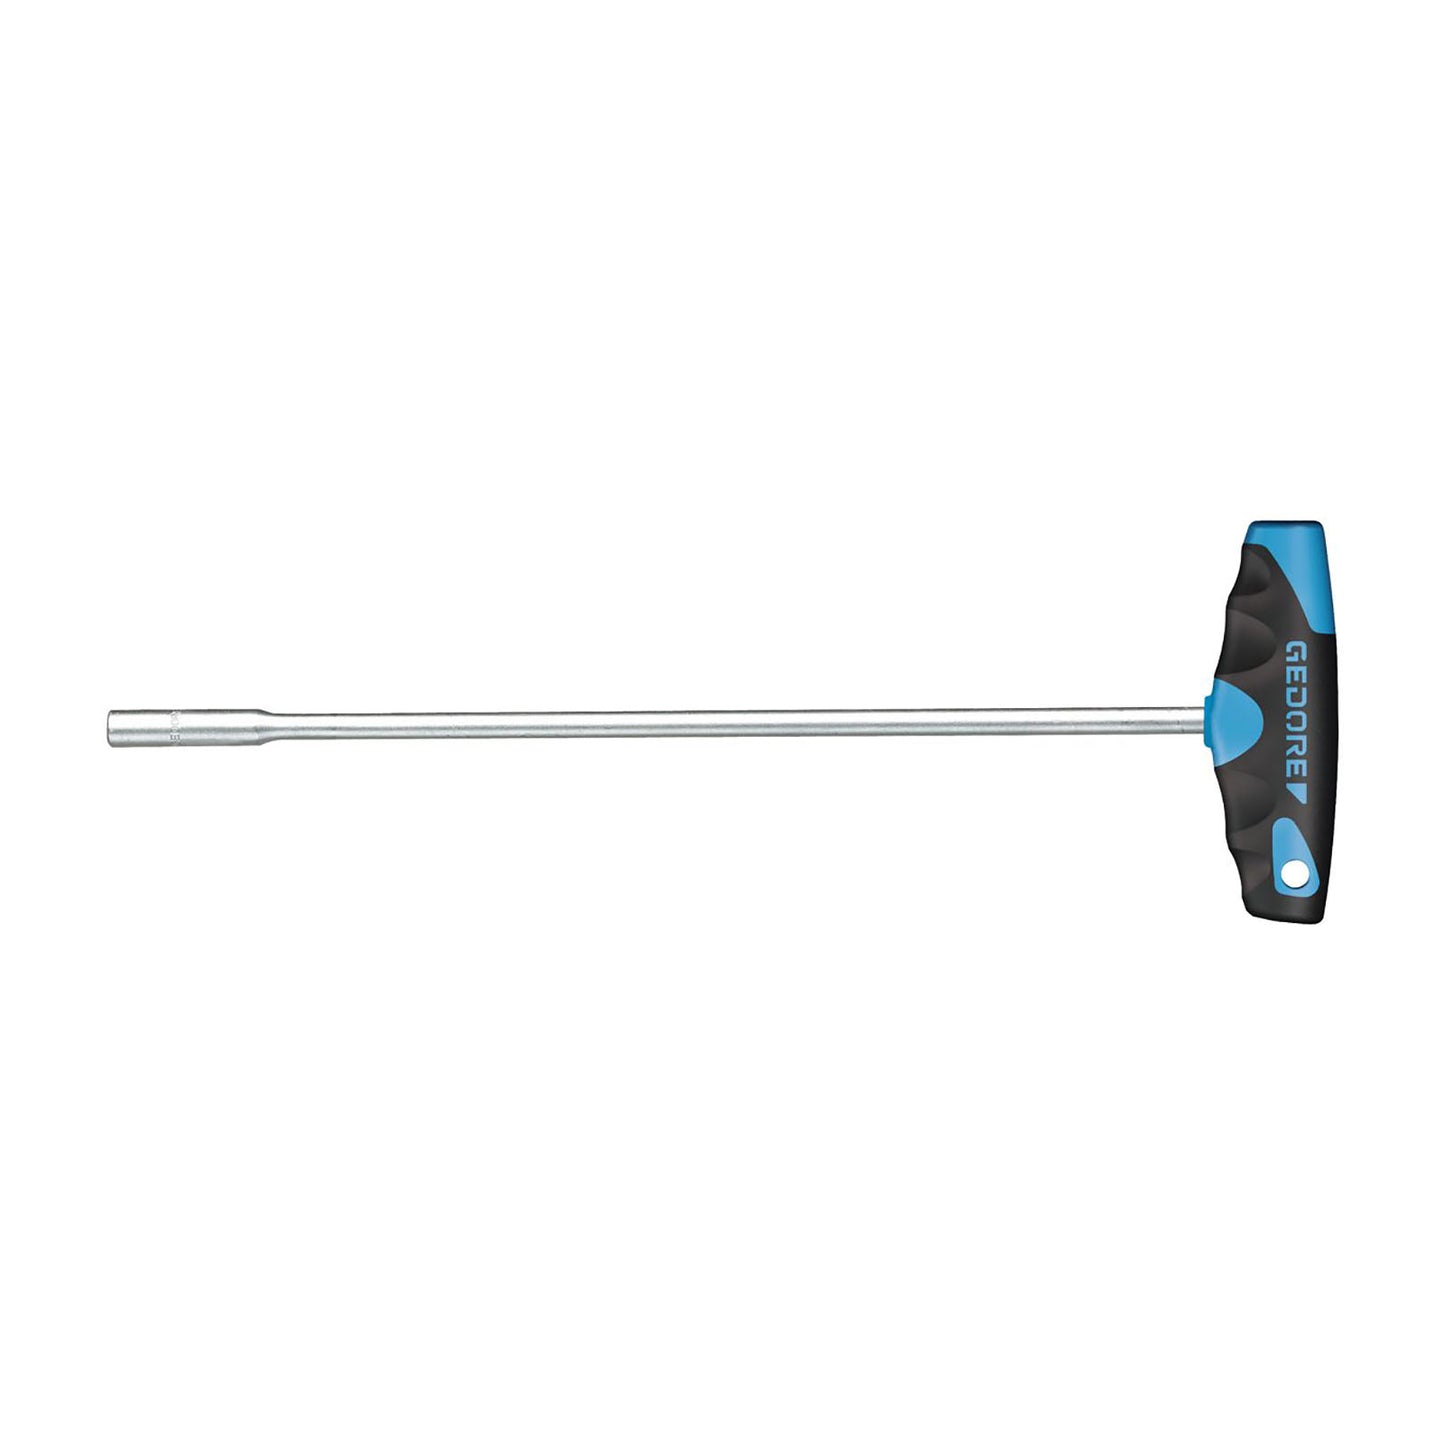 GEDORE 2133 T 11 - Stecker T-handle, 11mm (2647699)